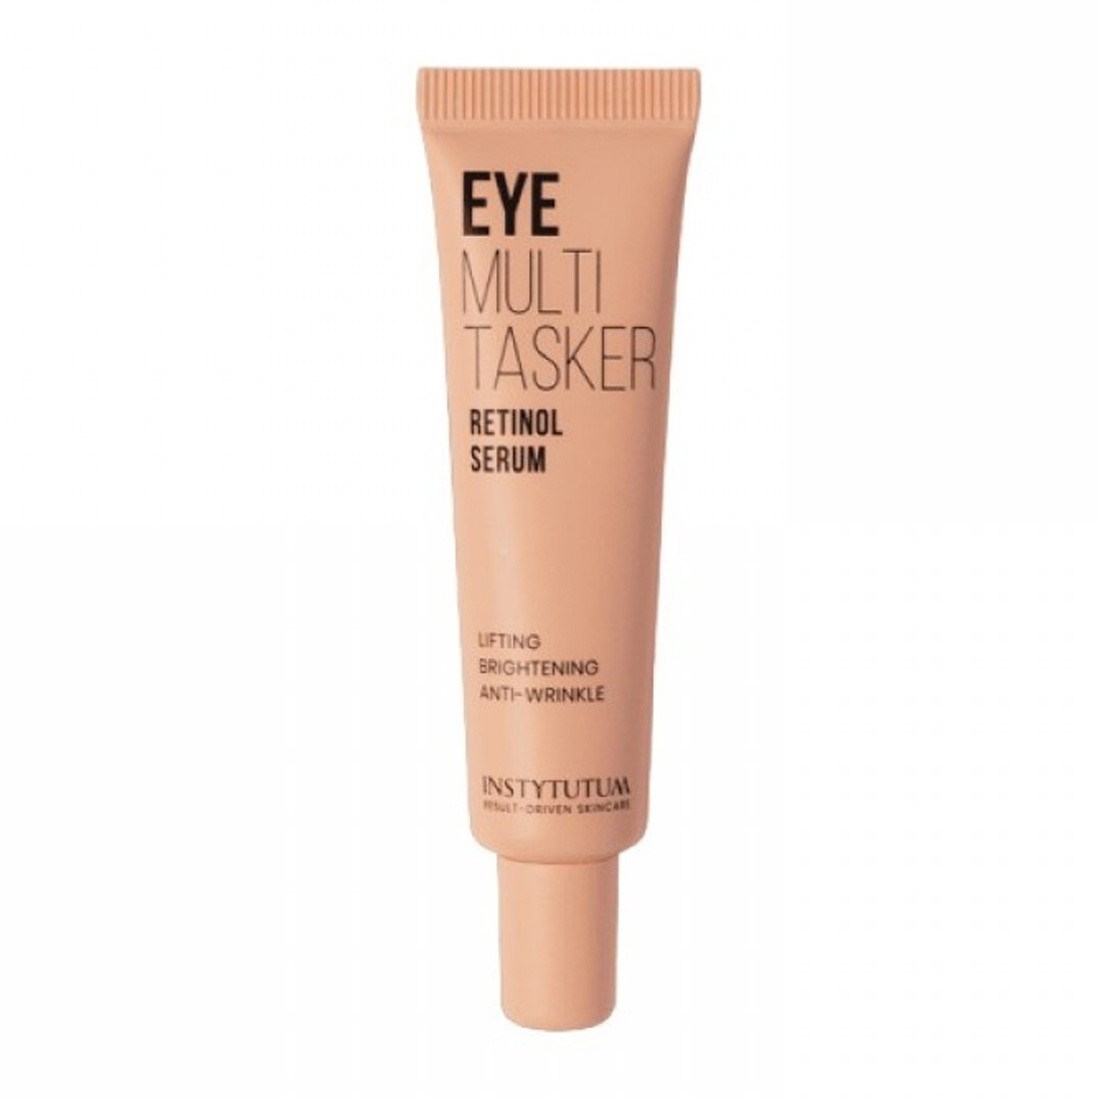 Instytutum Eye Multitasker Retinol Serum - Сыворотка для кожи вокруг глаз